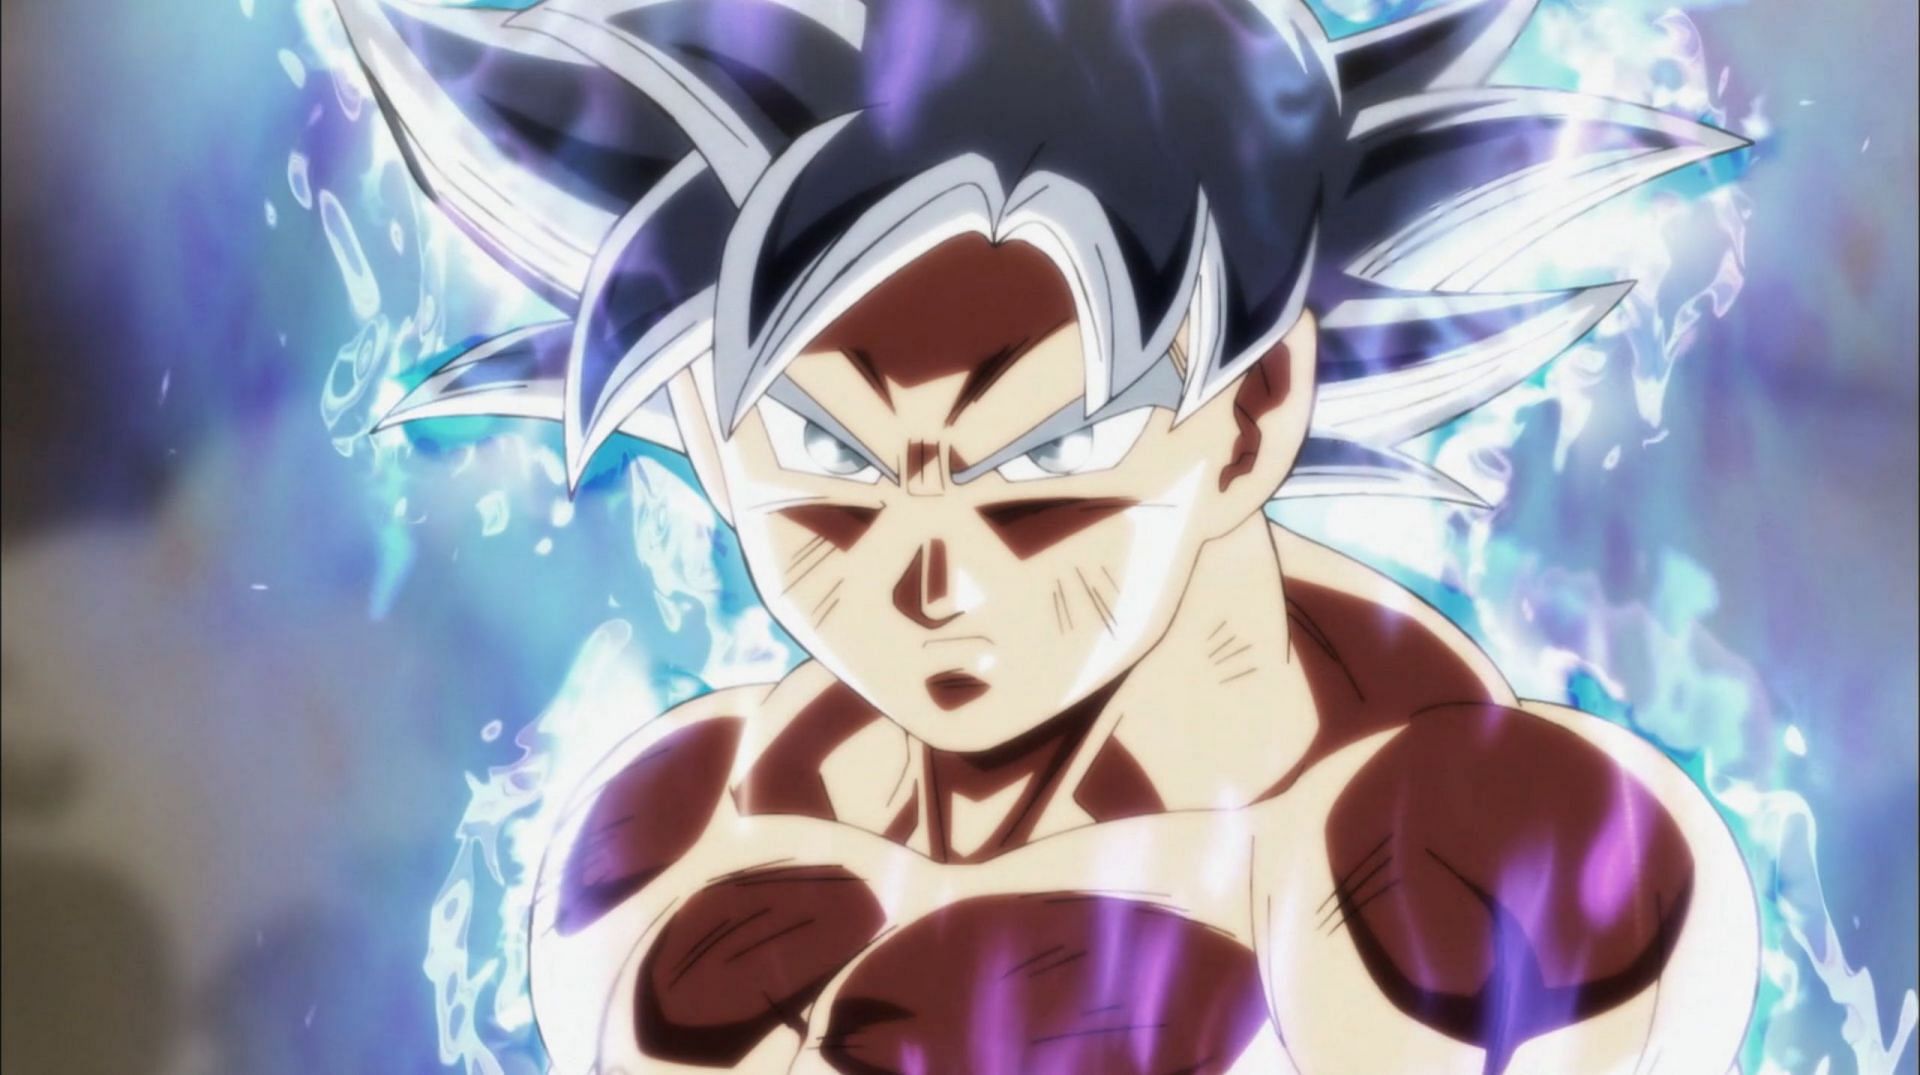 Ultra Instinct Goku, circa Tournament of Power (Image via Toei Animation)